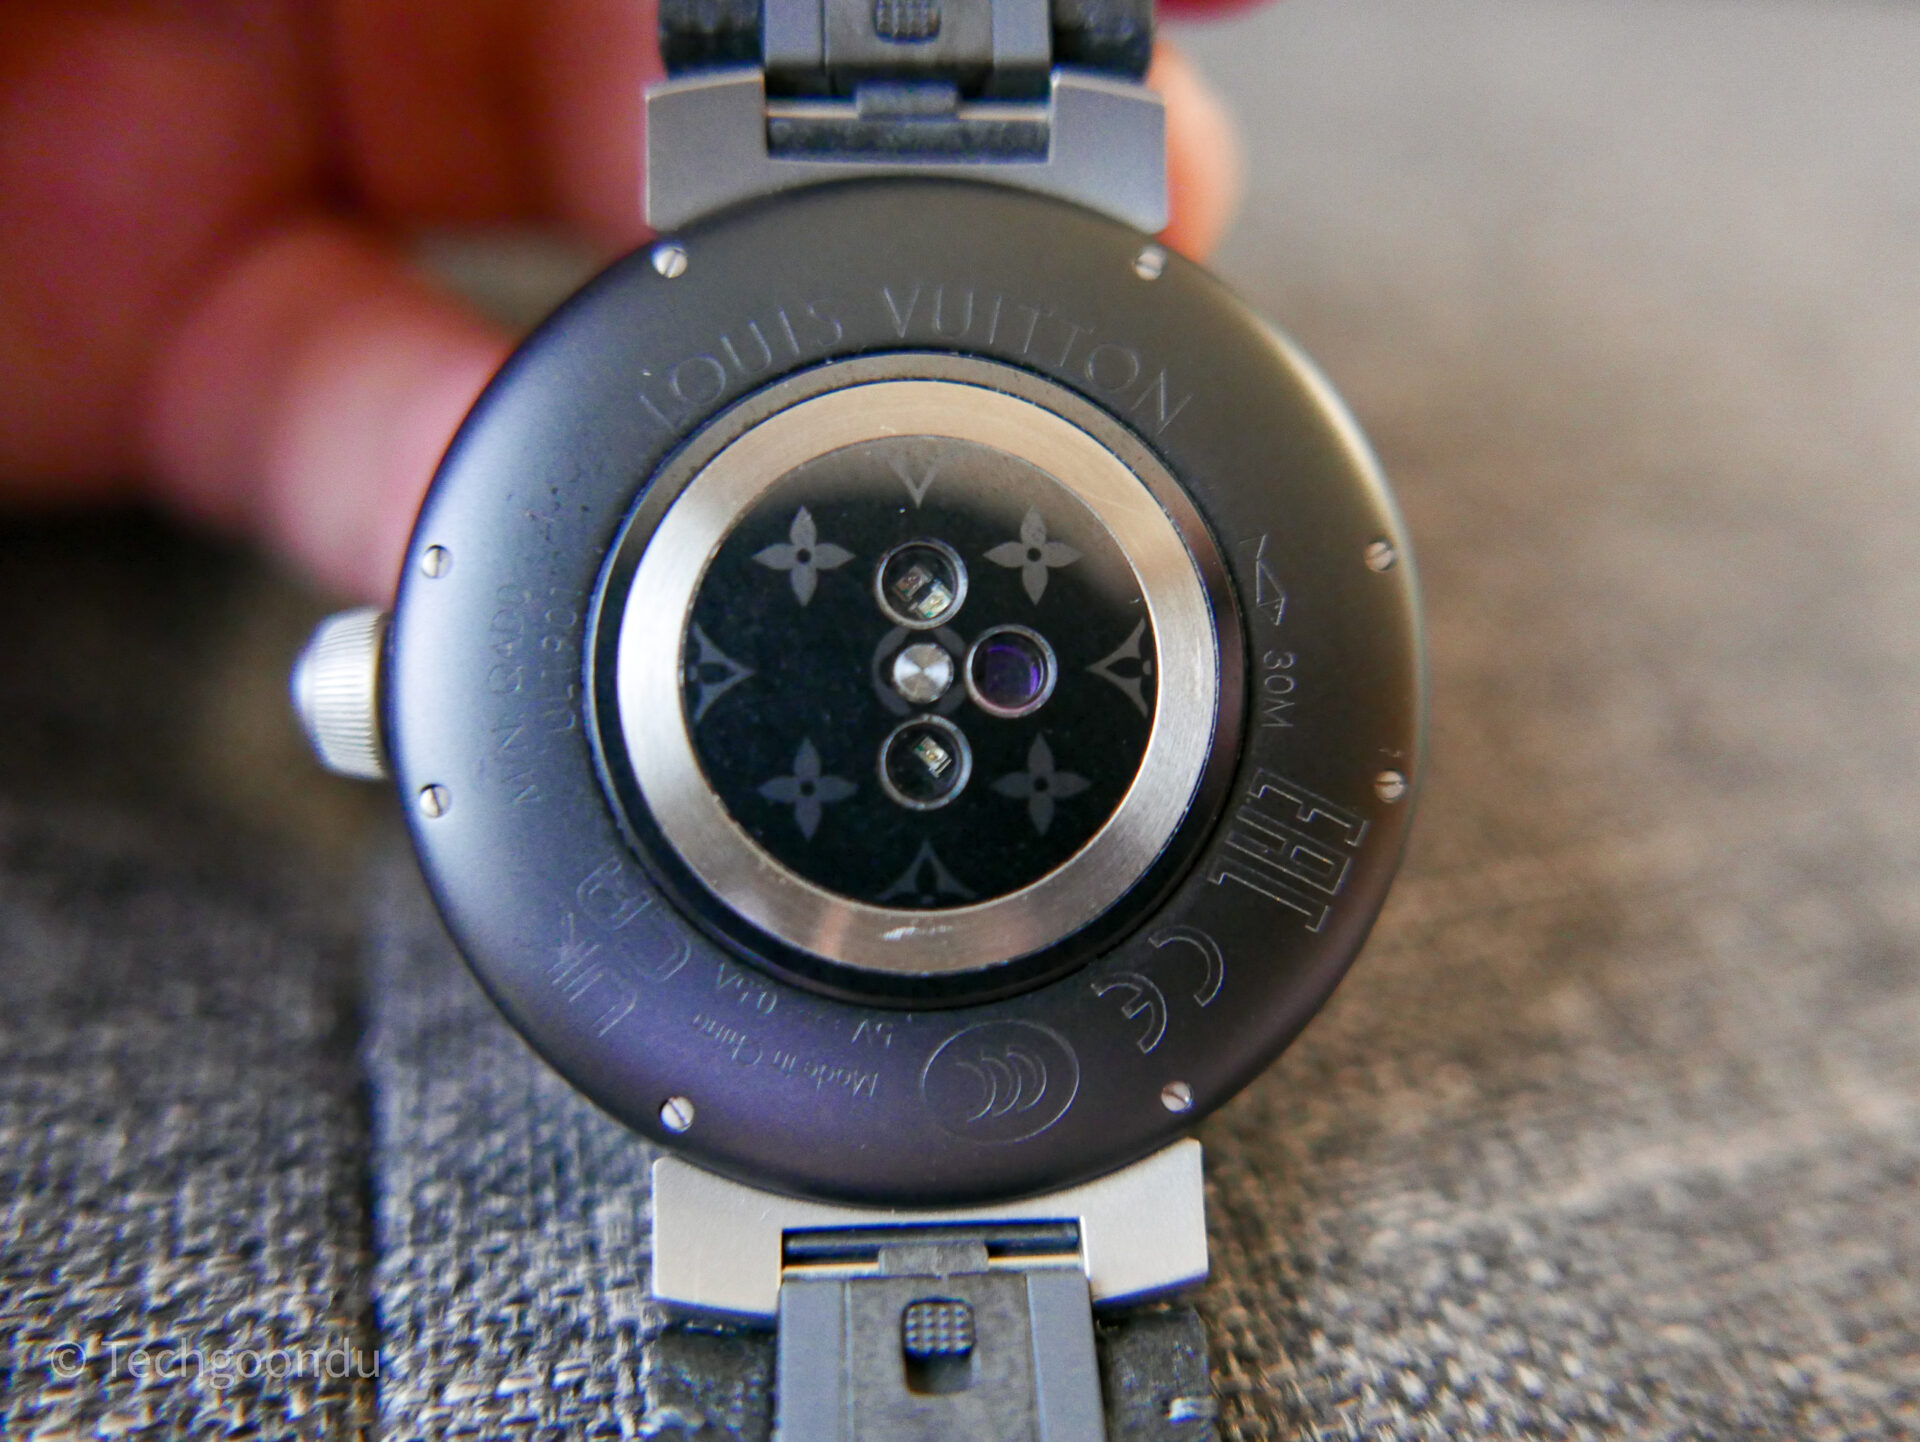 Louis Vuitton Tambour Horizon Lightup review: An expensive but amped-up  smartwatch - Techgoondu